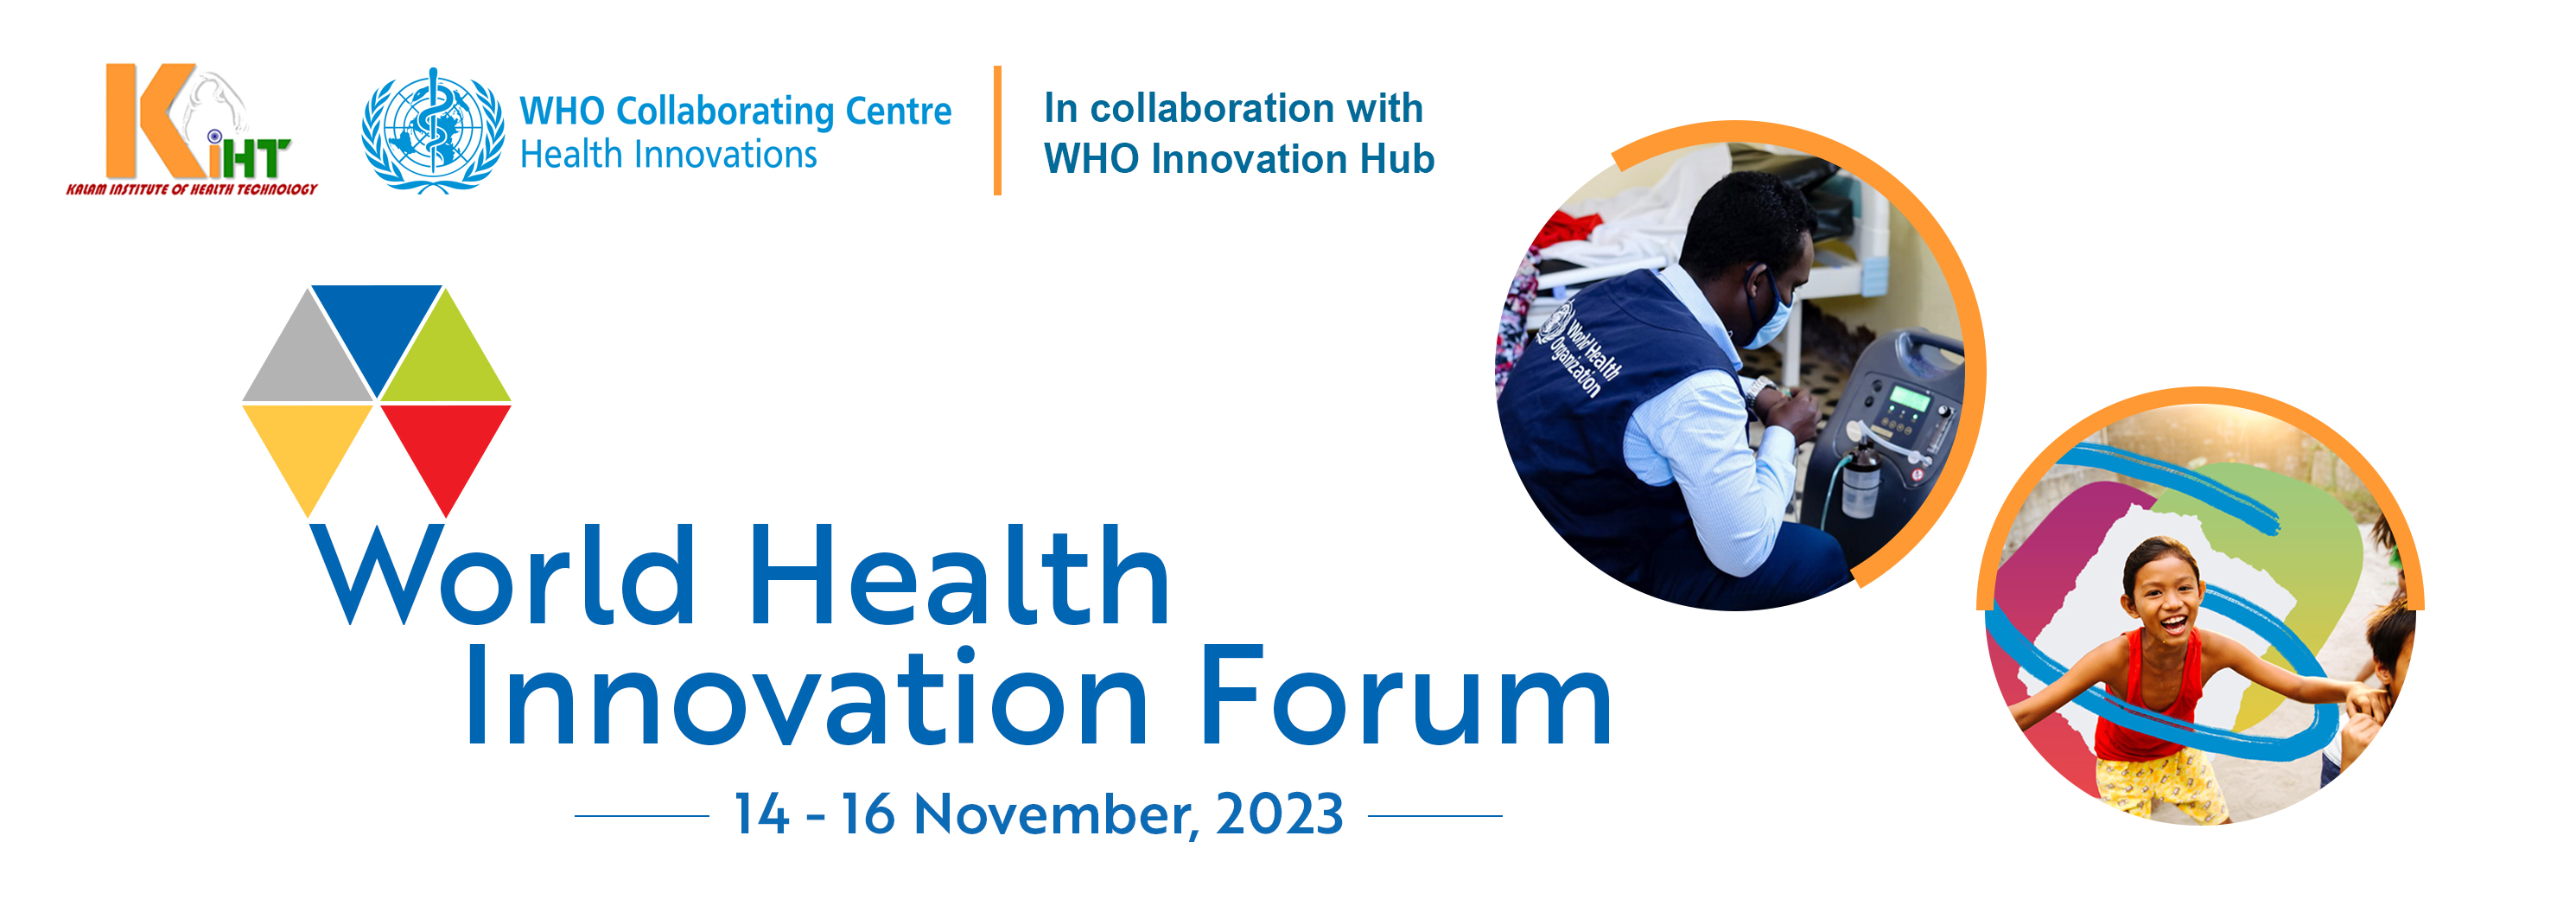 KIHT - WHO Collaborating Centre - World Health Innovation Forum - February 16 - 18, 2023